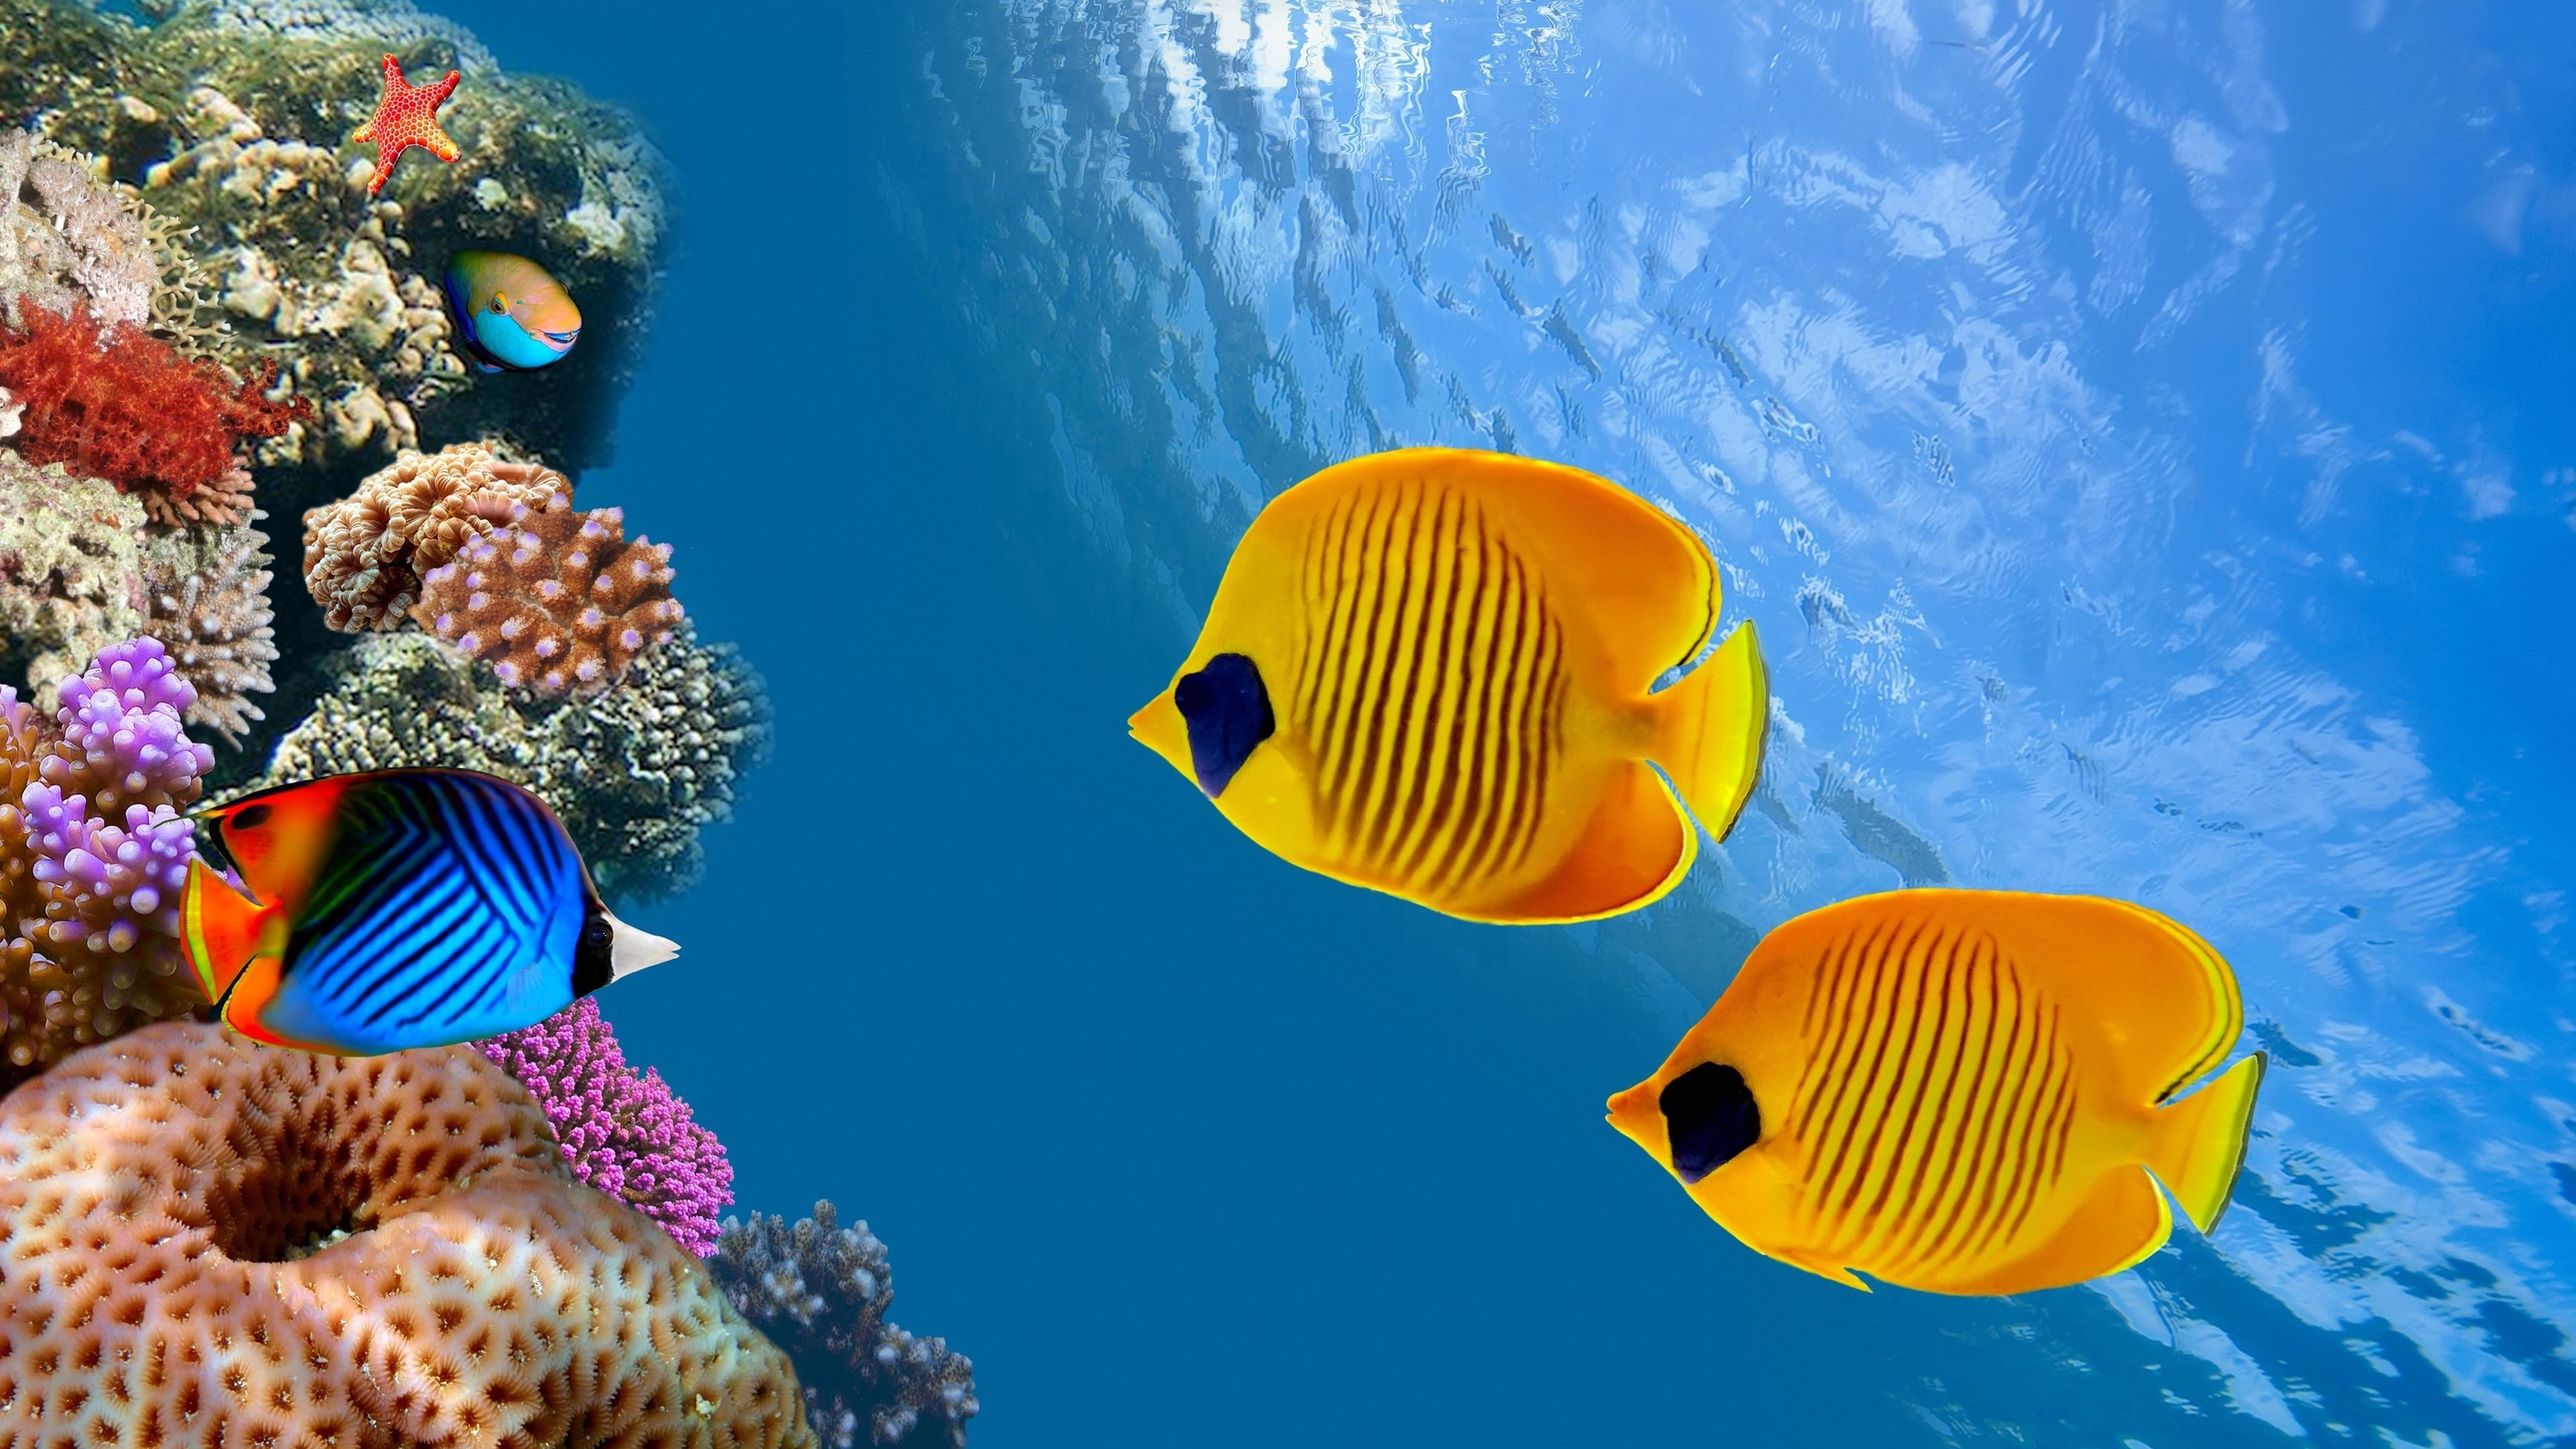 Aquarium, Underwater world, Exotic marine life, Colorful fish, Tranquil environment, 3840x2160 4K Desktop